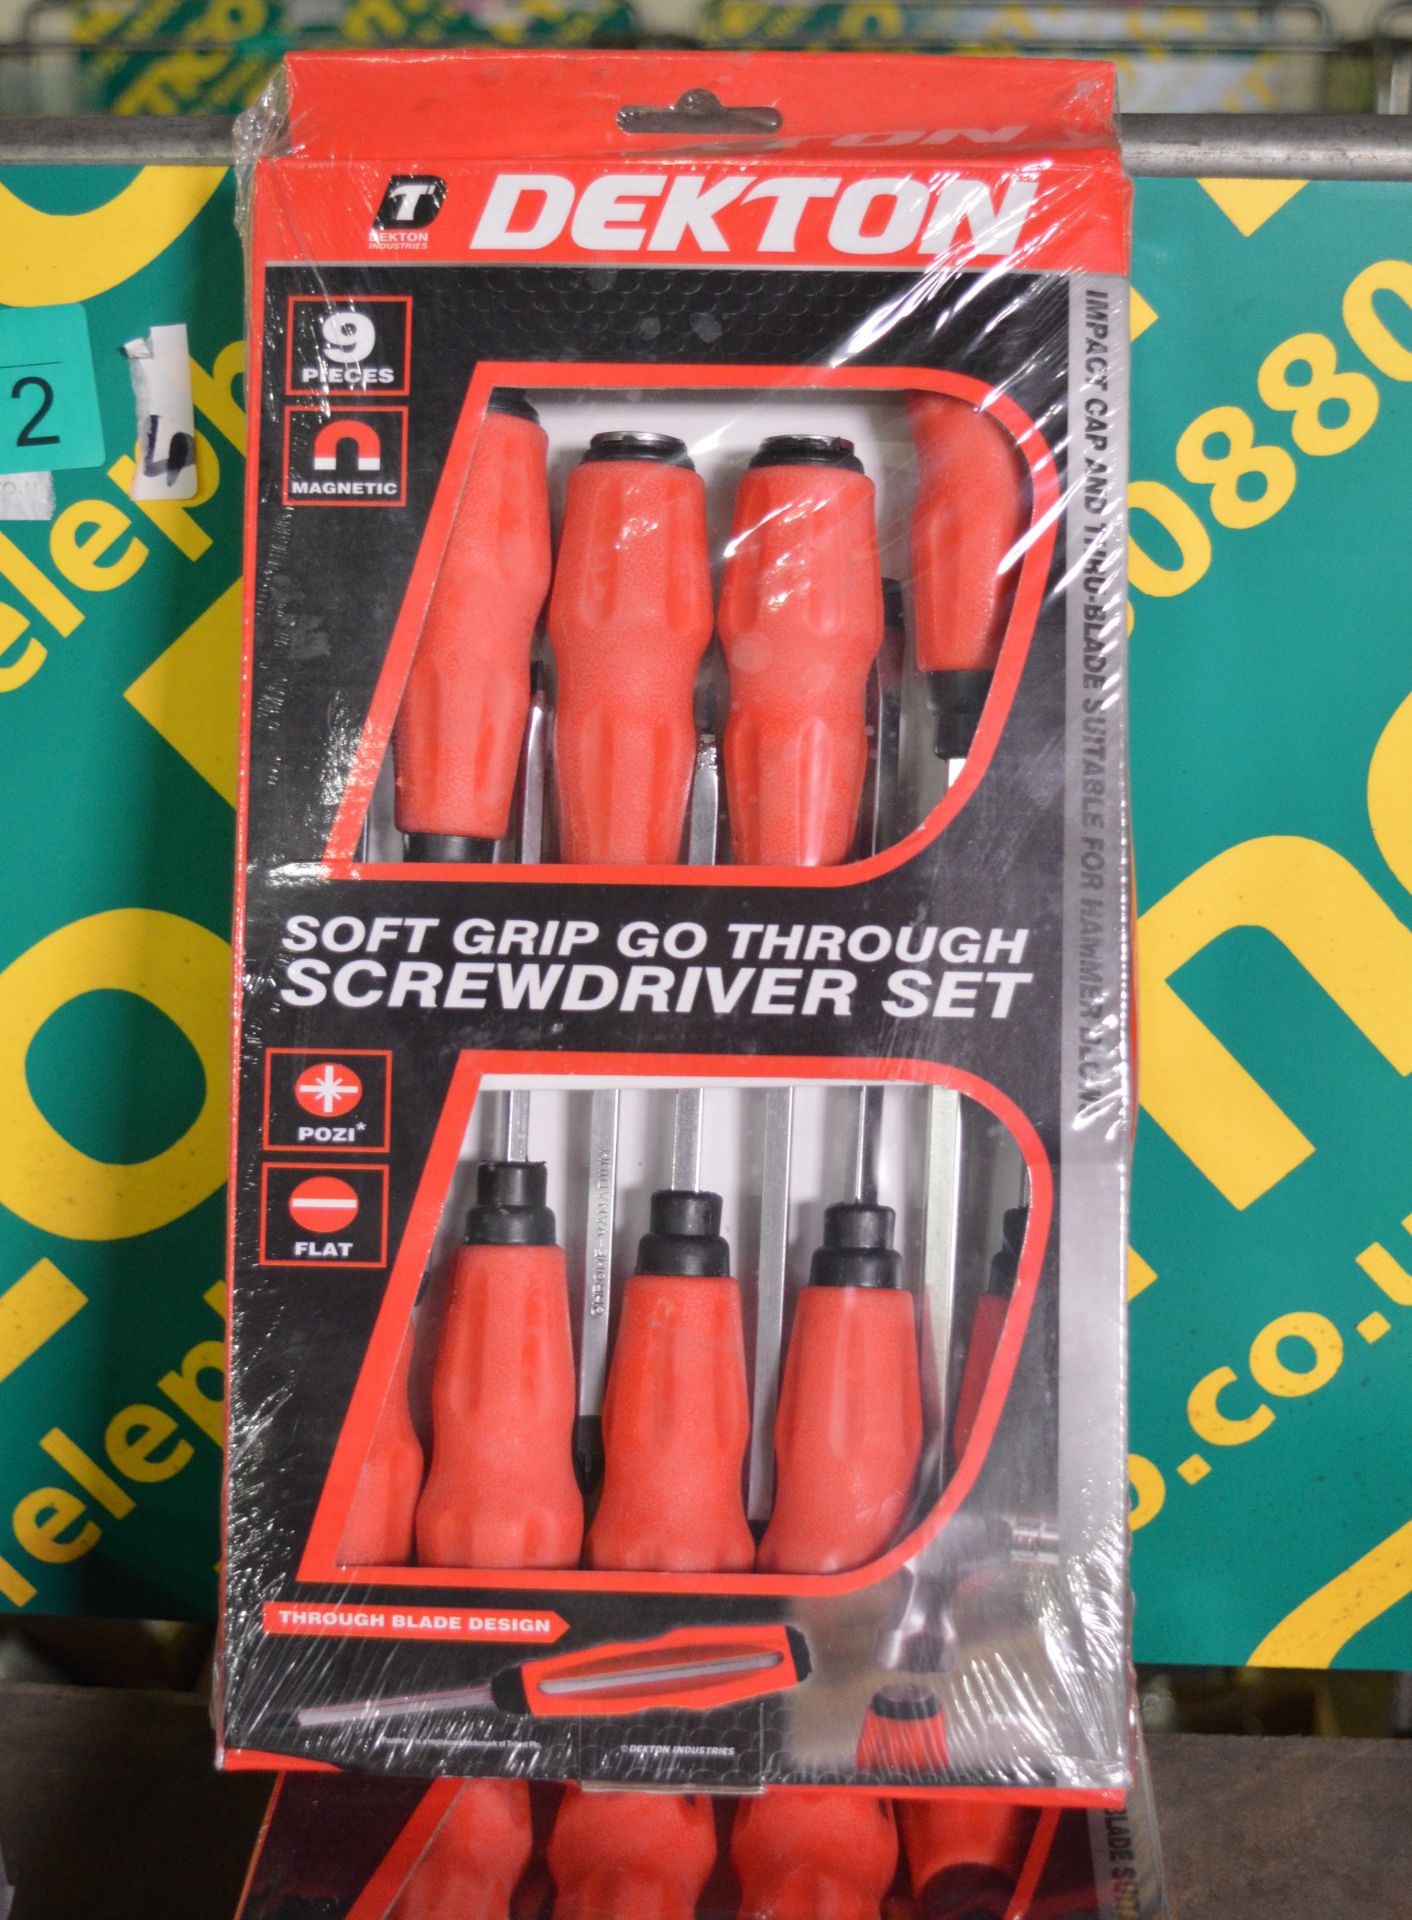 4x Dekton soft grip go through screwdriver sets - 9 piece - magnetic - Image 2 of 2